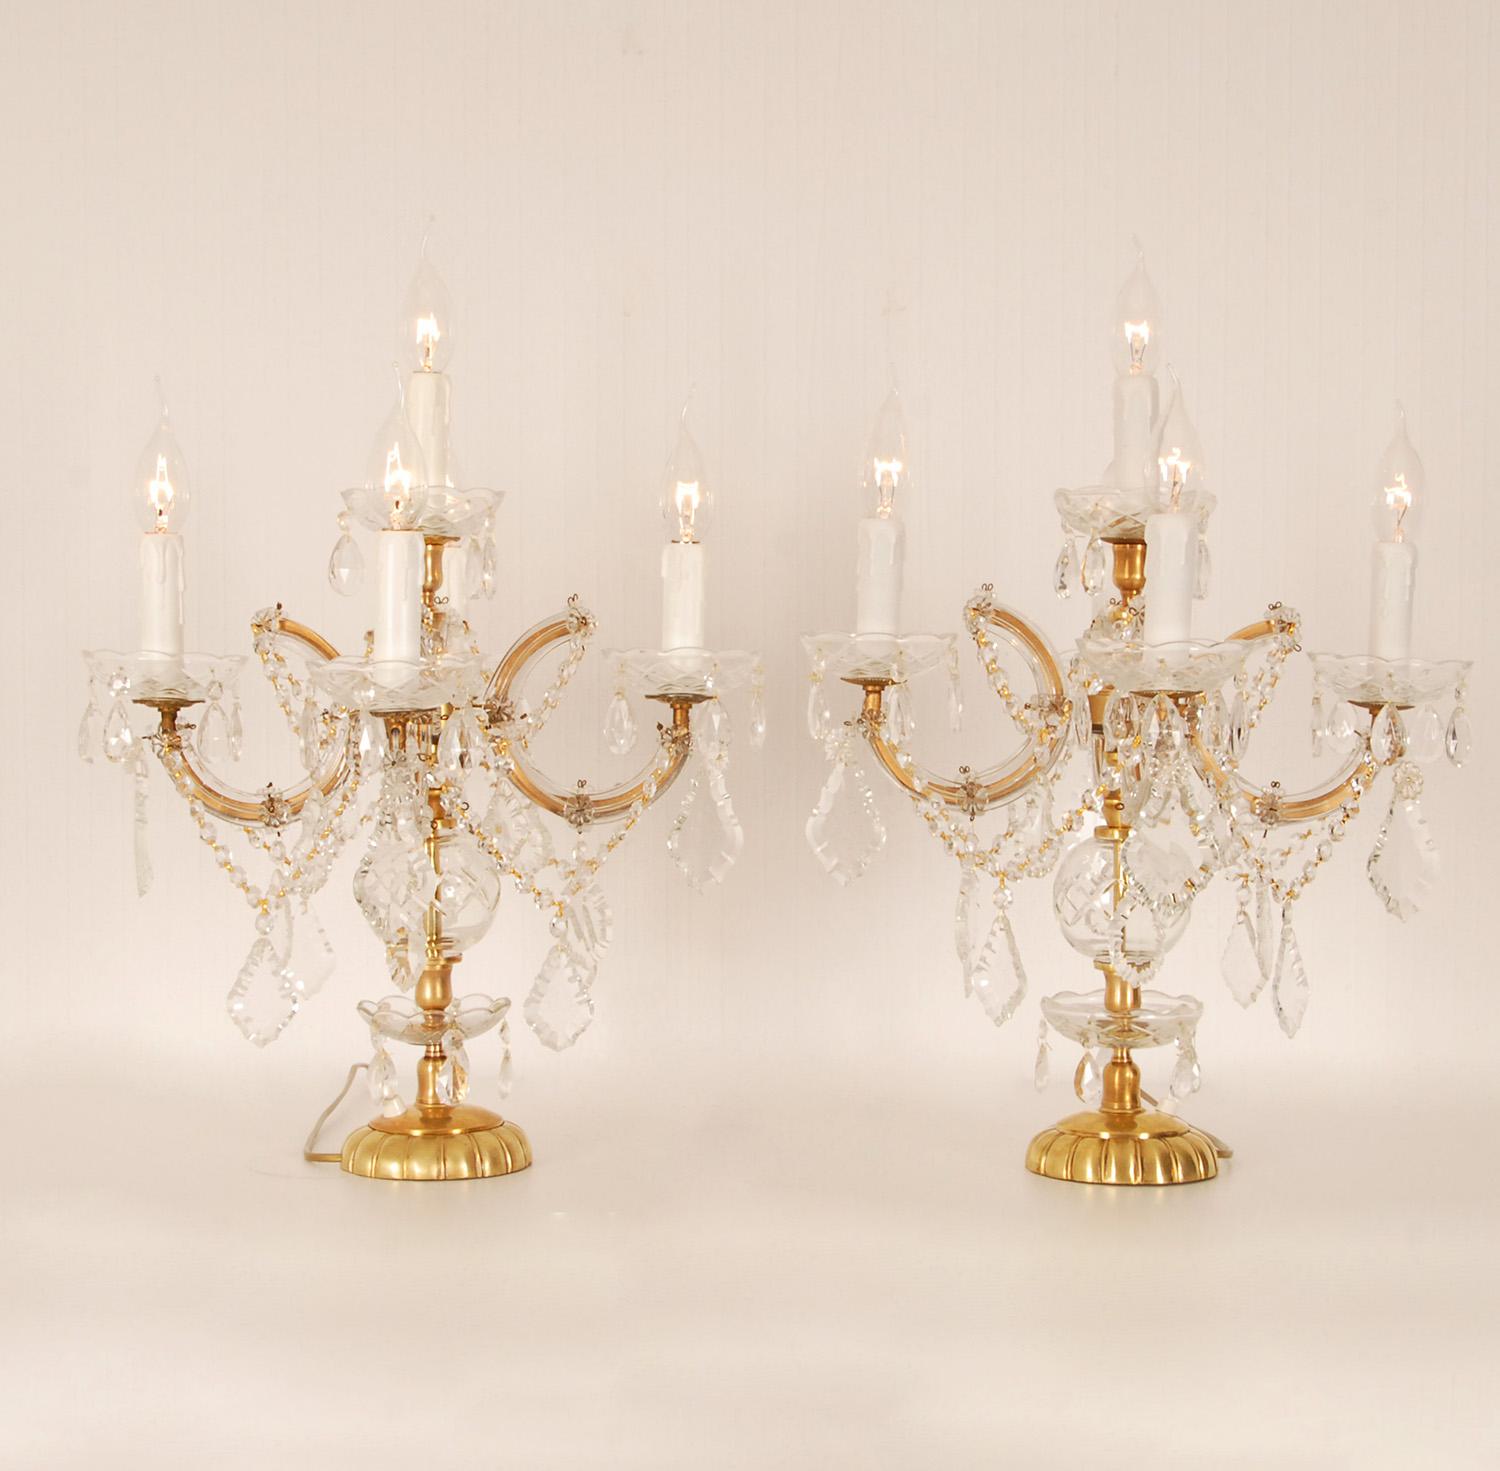 Kristall-Tischlampen von Marie Therese, vergoldetes Messing, Paar (20. Jahrhundert)